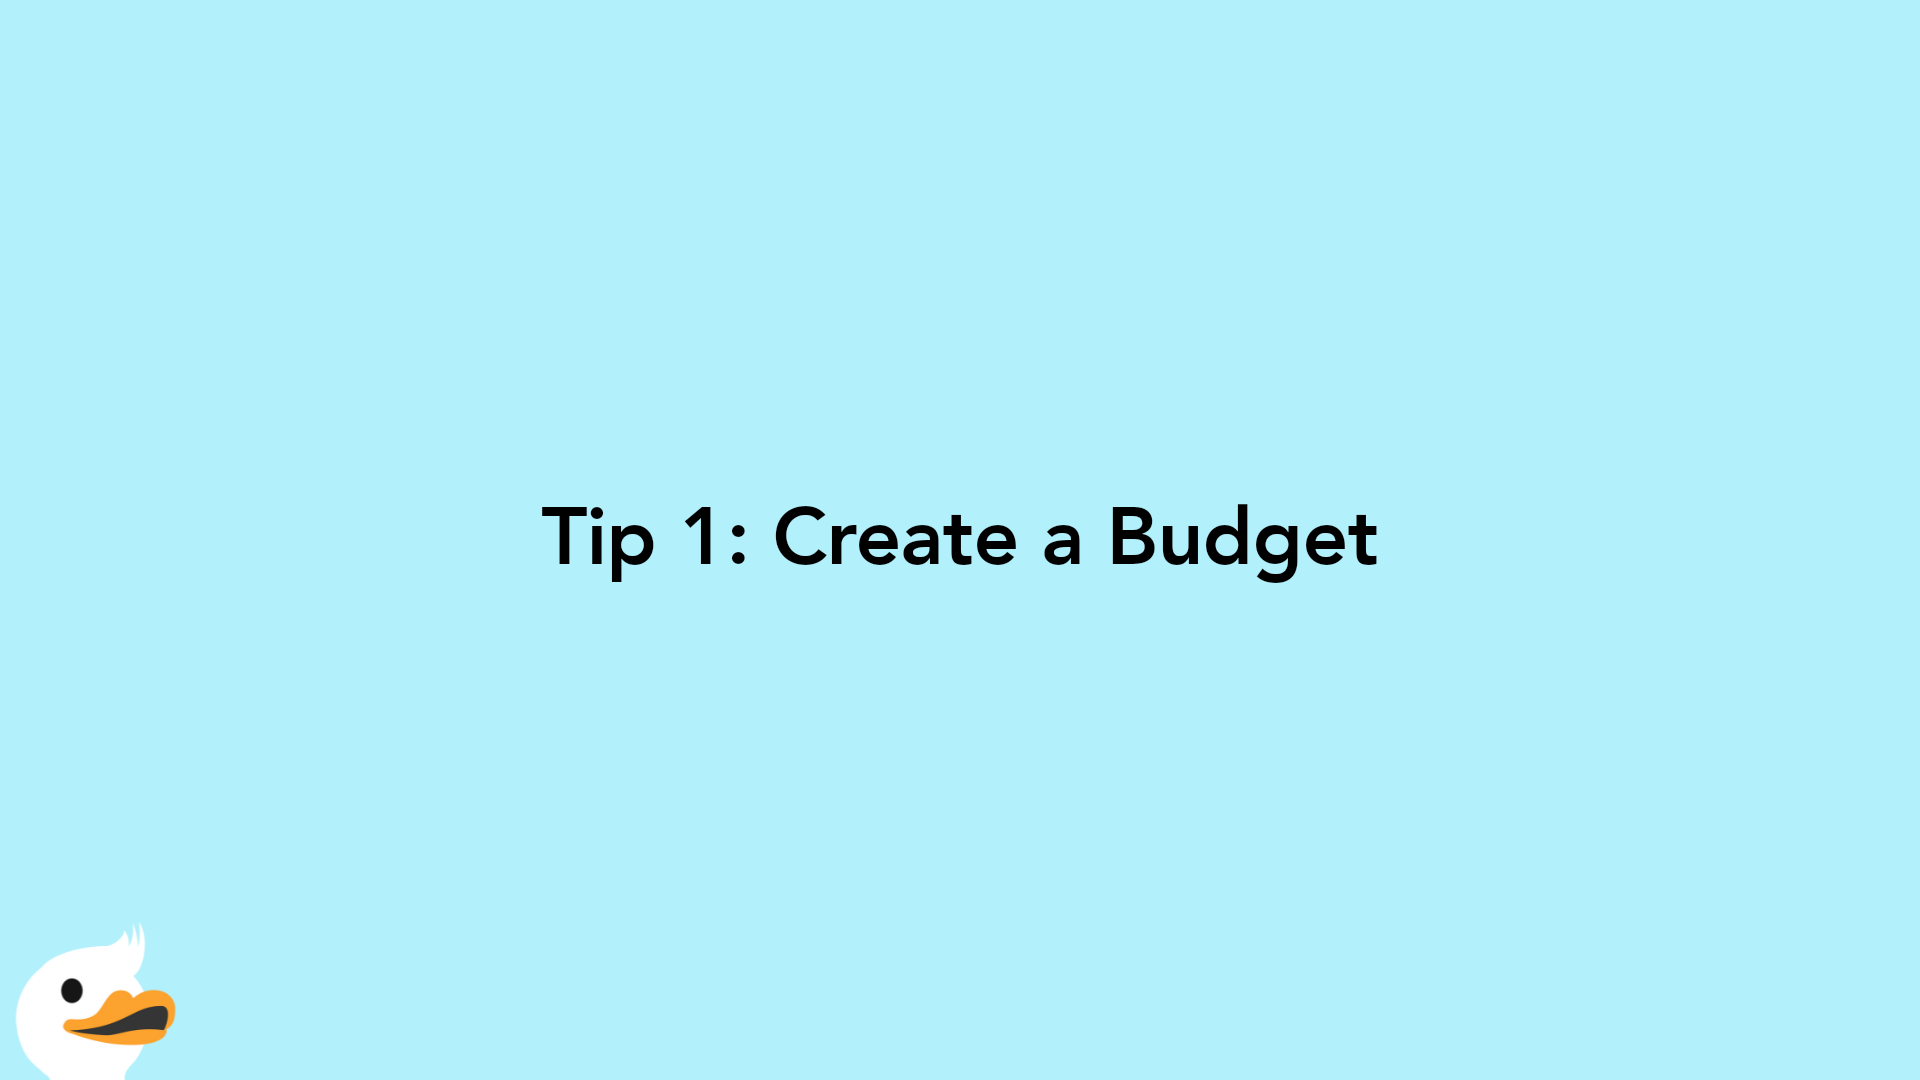 Tip 1: Create a Budget